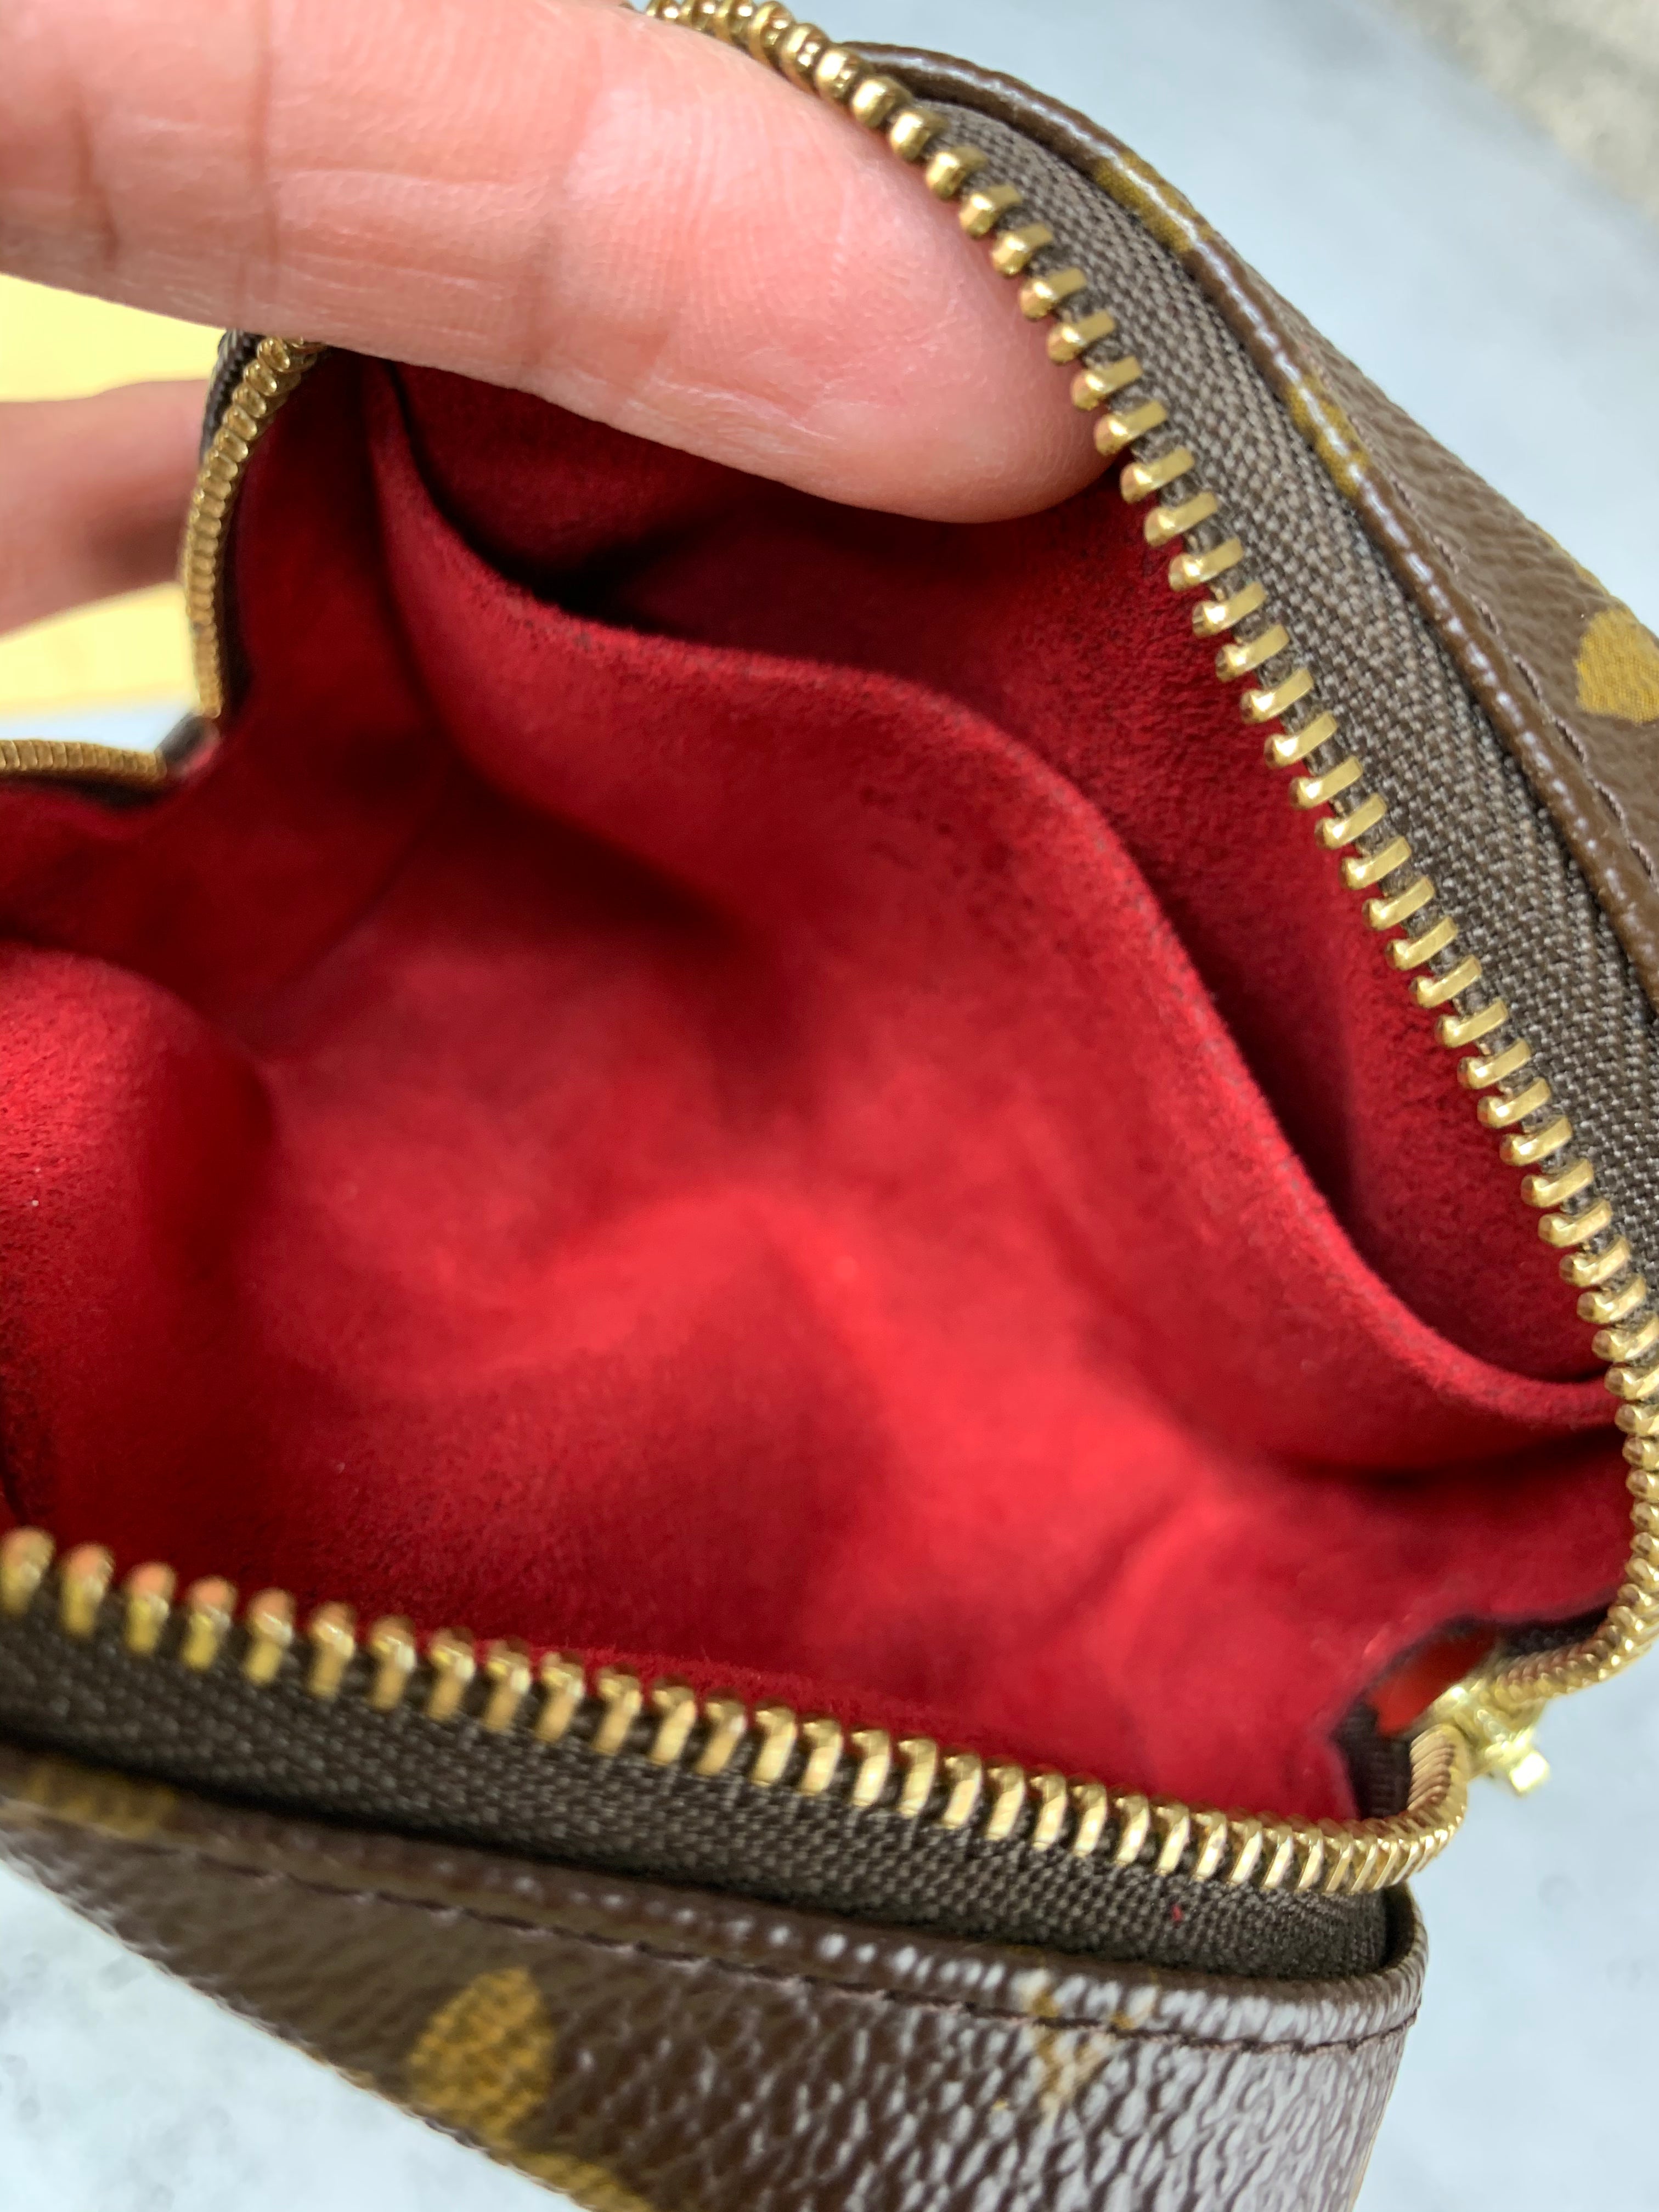 Wapity Case Autres Toiles Monogram - Women - Small Leather Goods